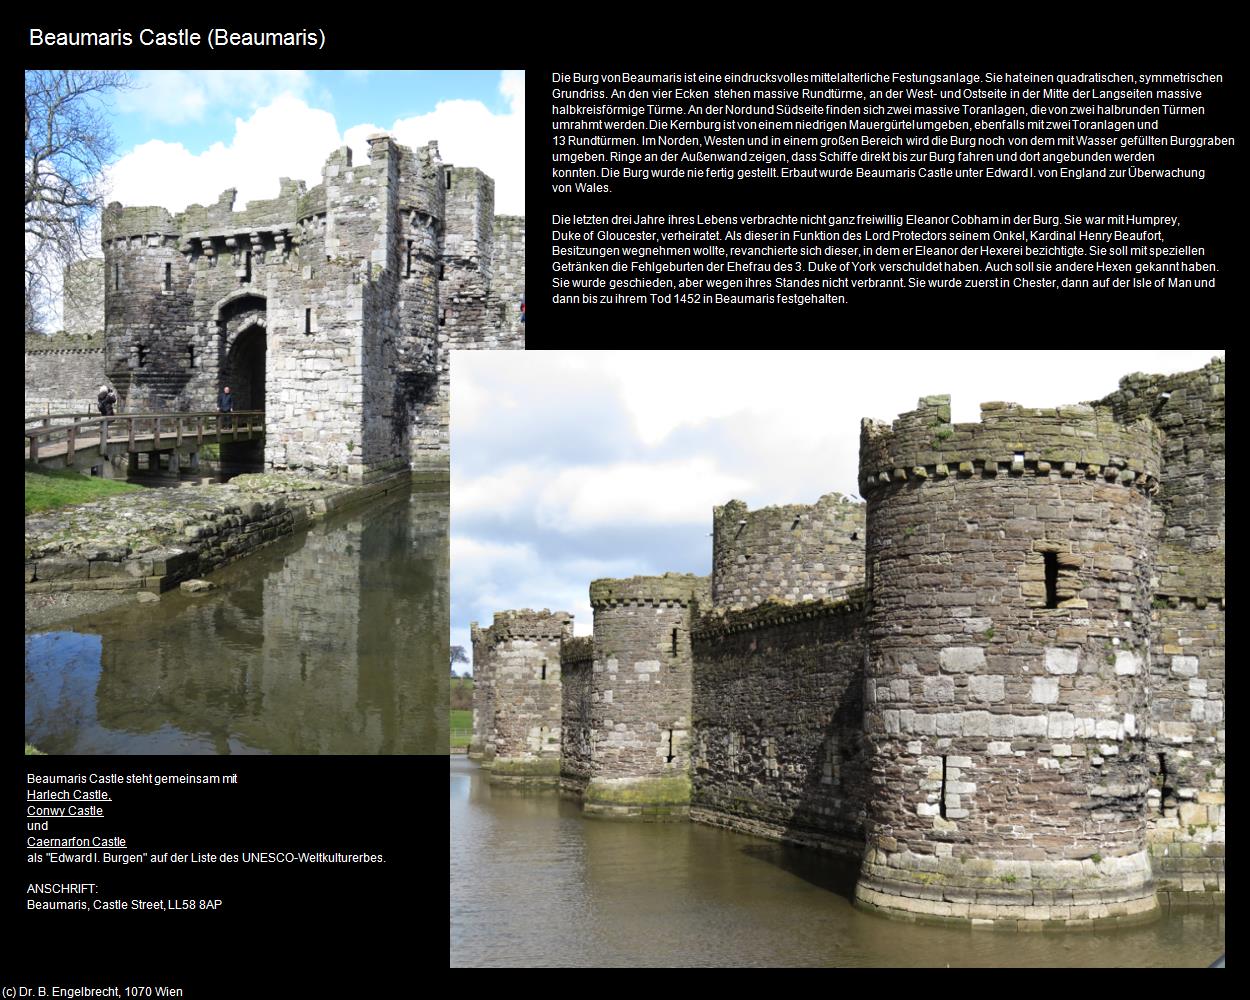 Beaumaris Castle  (Beaumaris, Wales) in Kulturatlas-ENGLAND und WALES(c)B.Engelbrecht